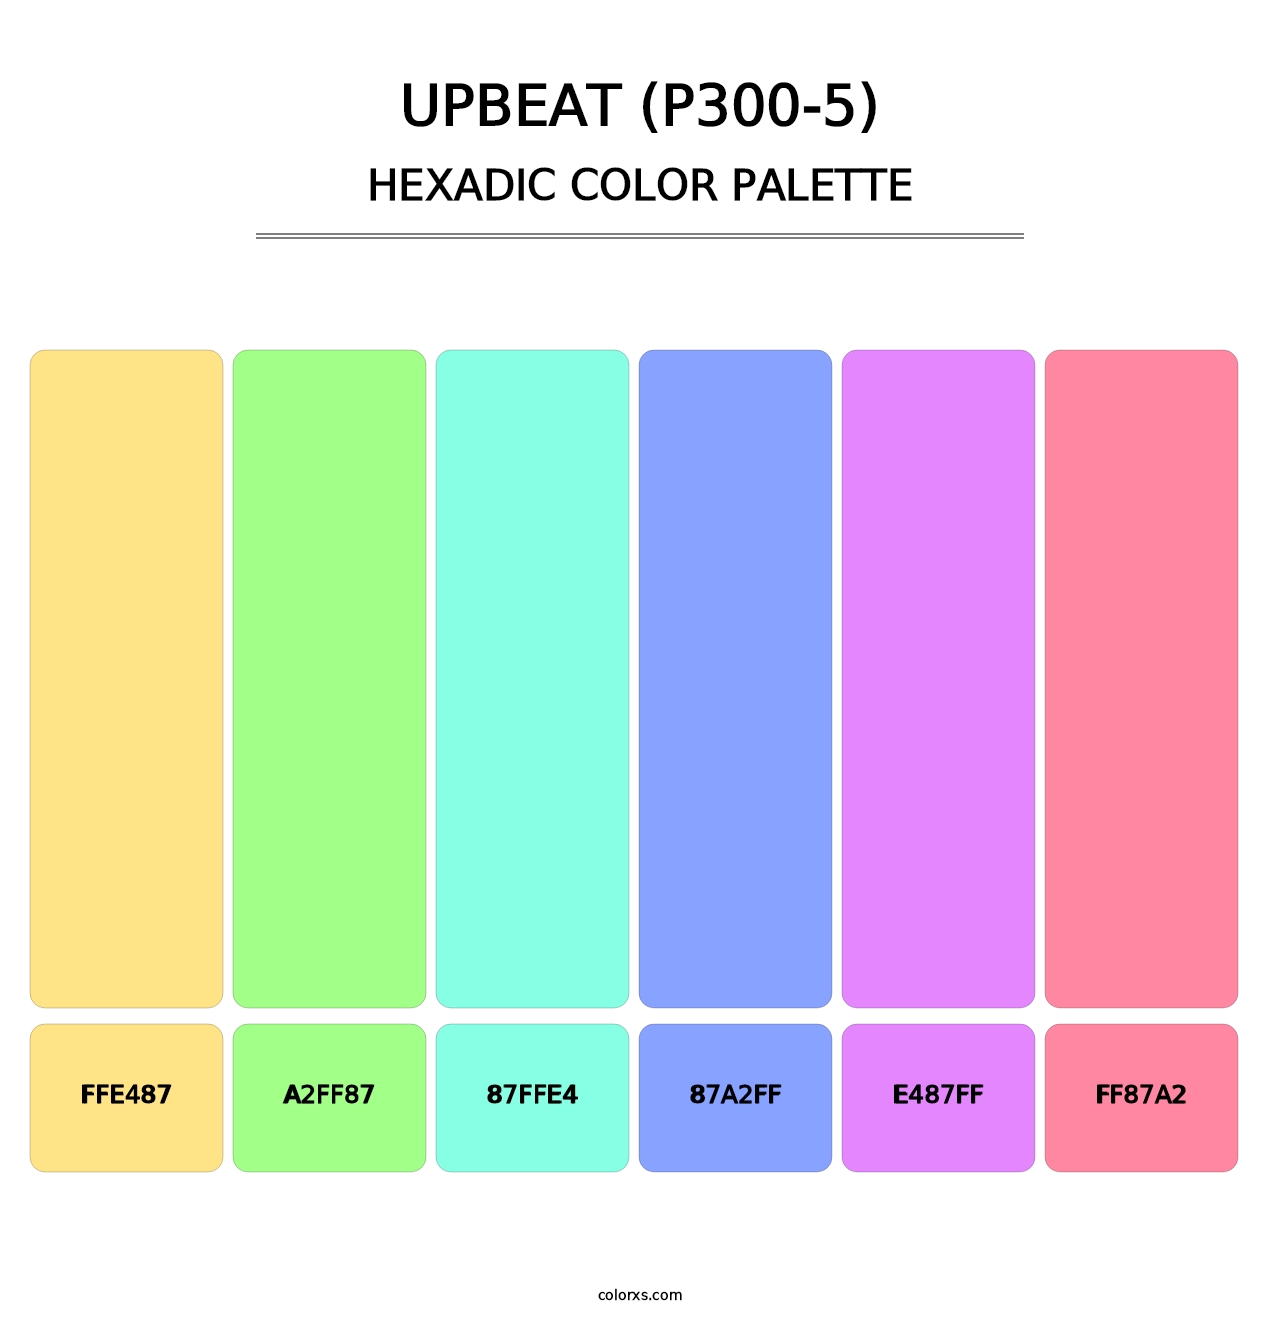 Upbeat (P300-5) - Hexadic Color Palette